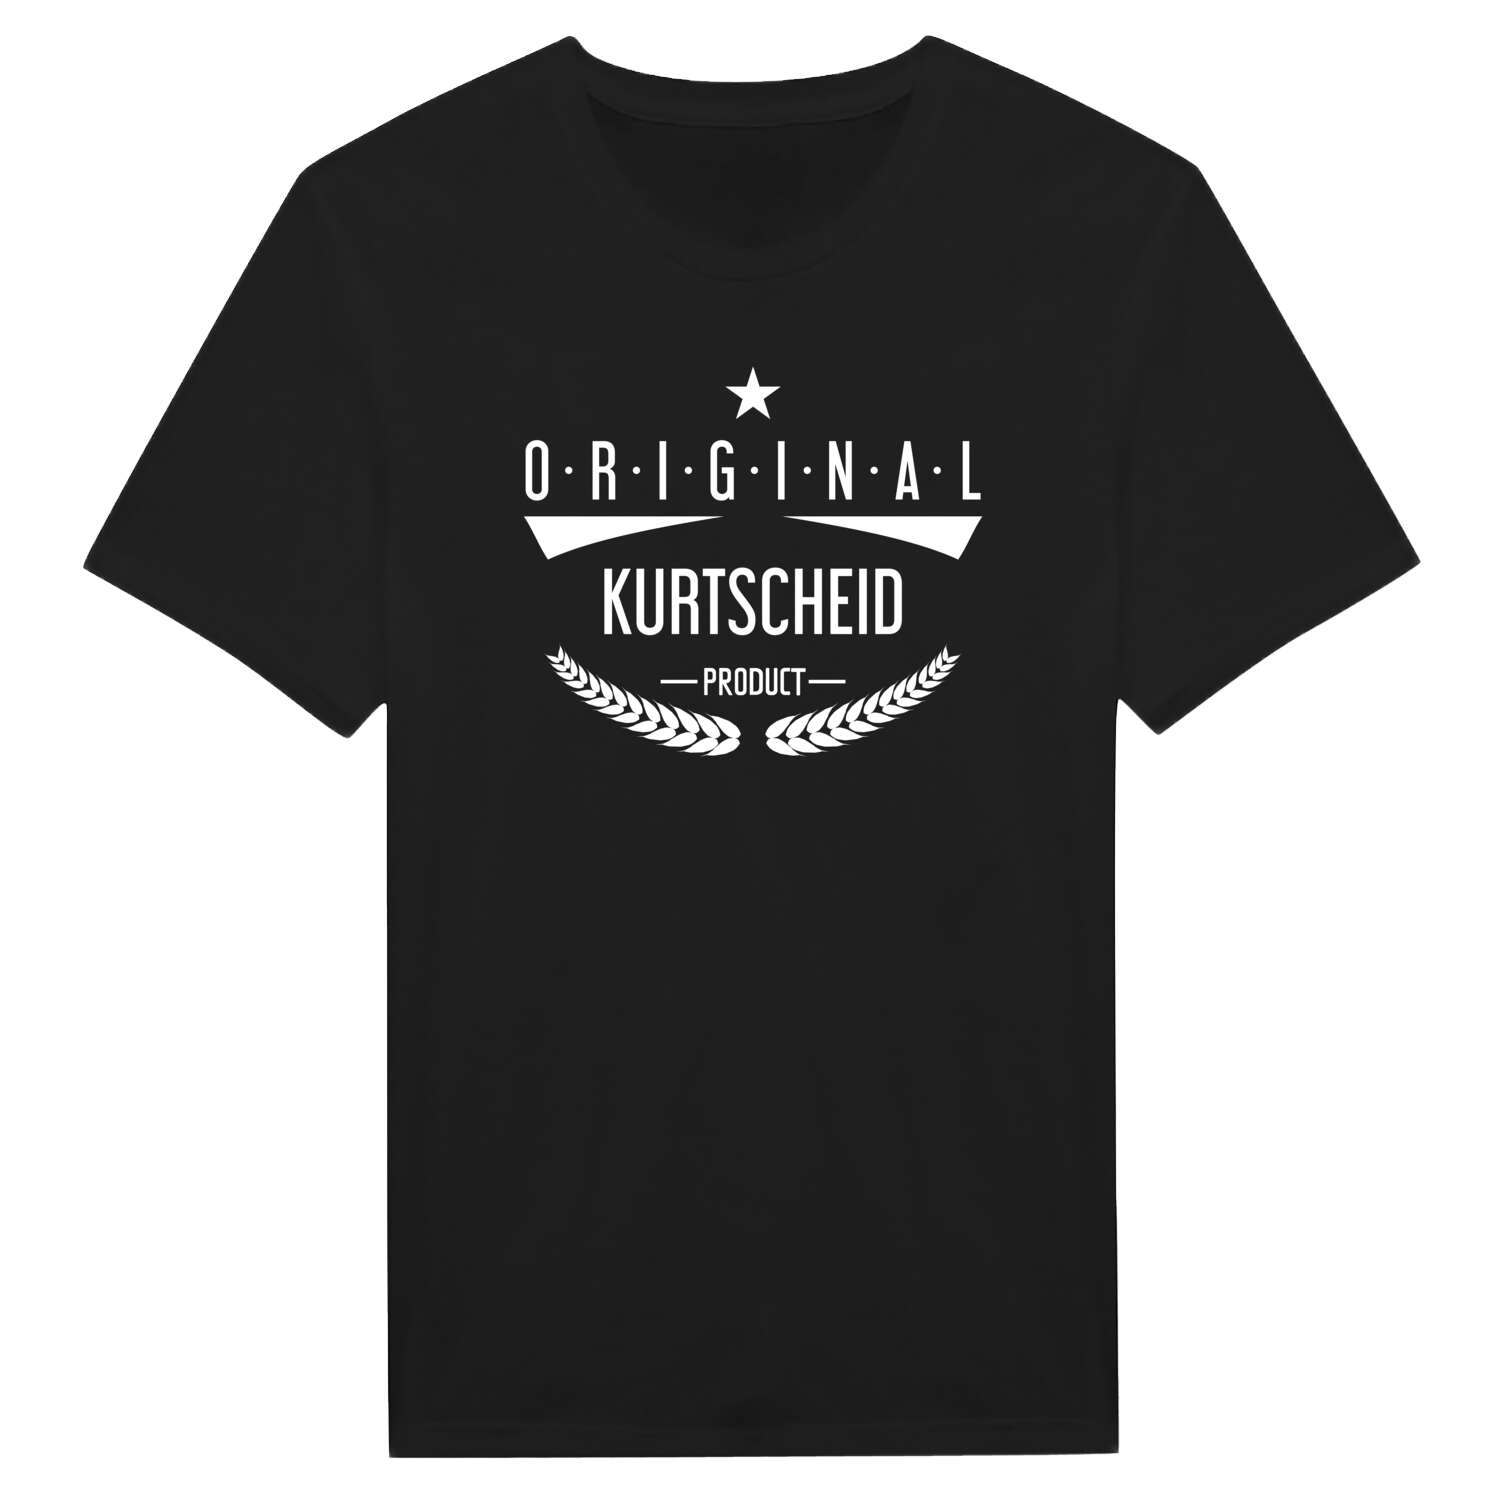 Kurtscheid T-Shirt »Original Product«